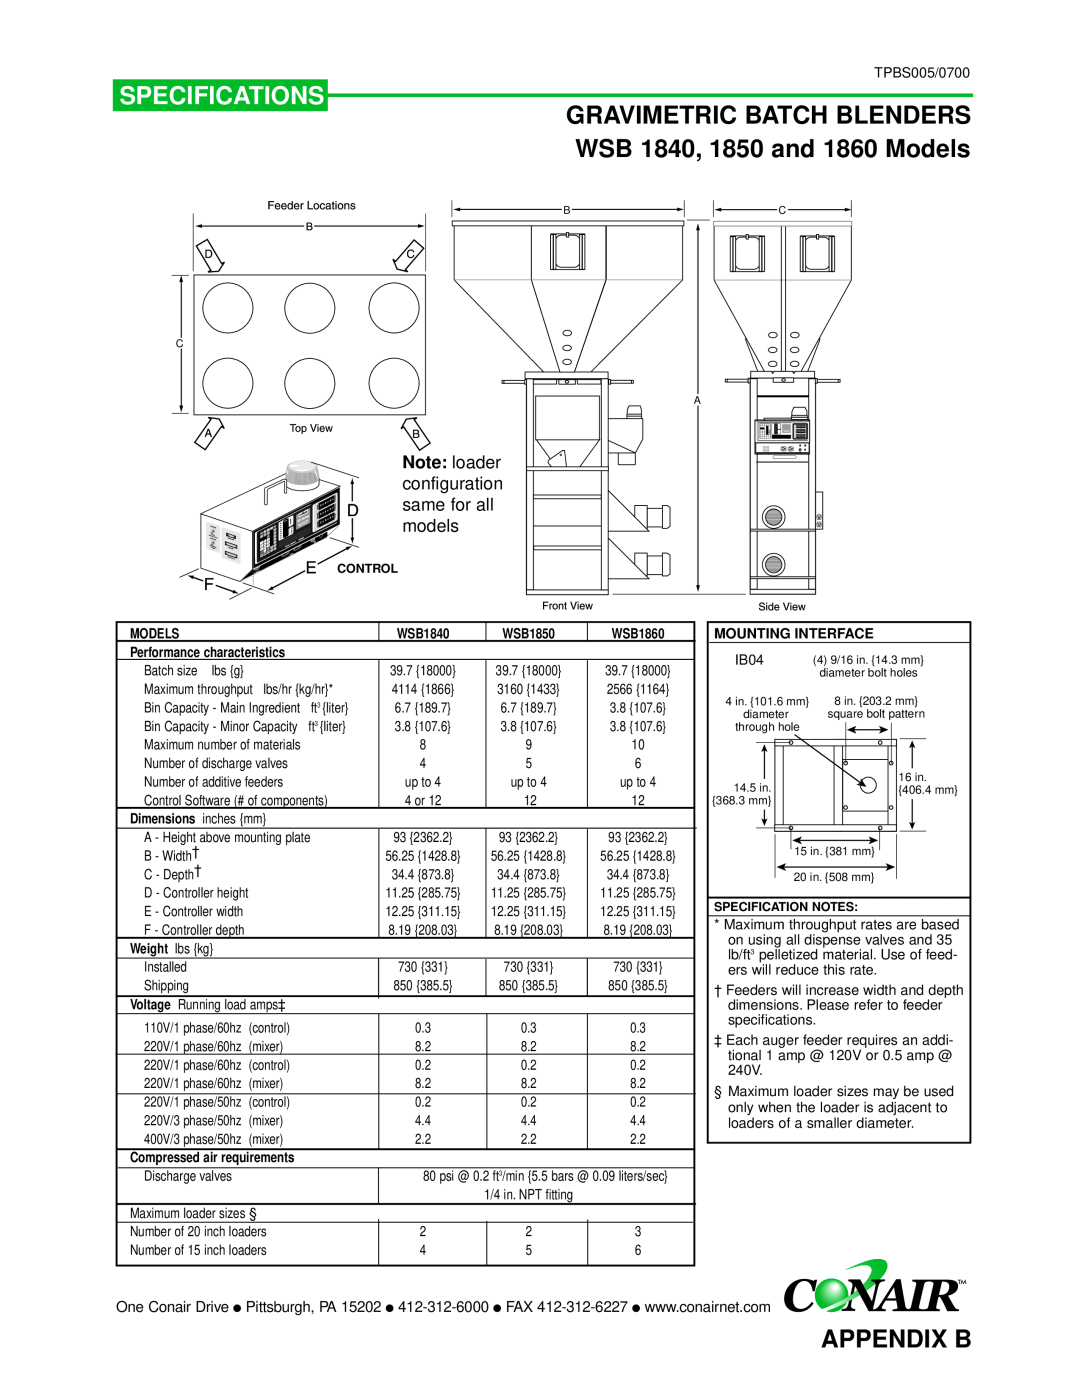 Conair GB/ WSB manual WSB 1840, 1850 and 1860 Models, Specifications, Gravimetric Batch Blenders, Appendix B, Note: loader 